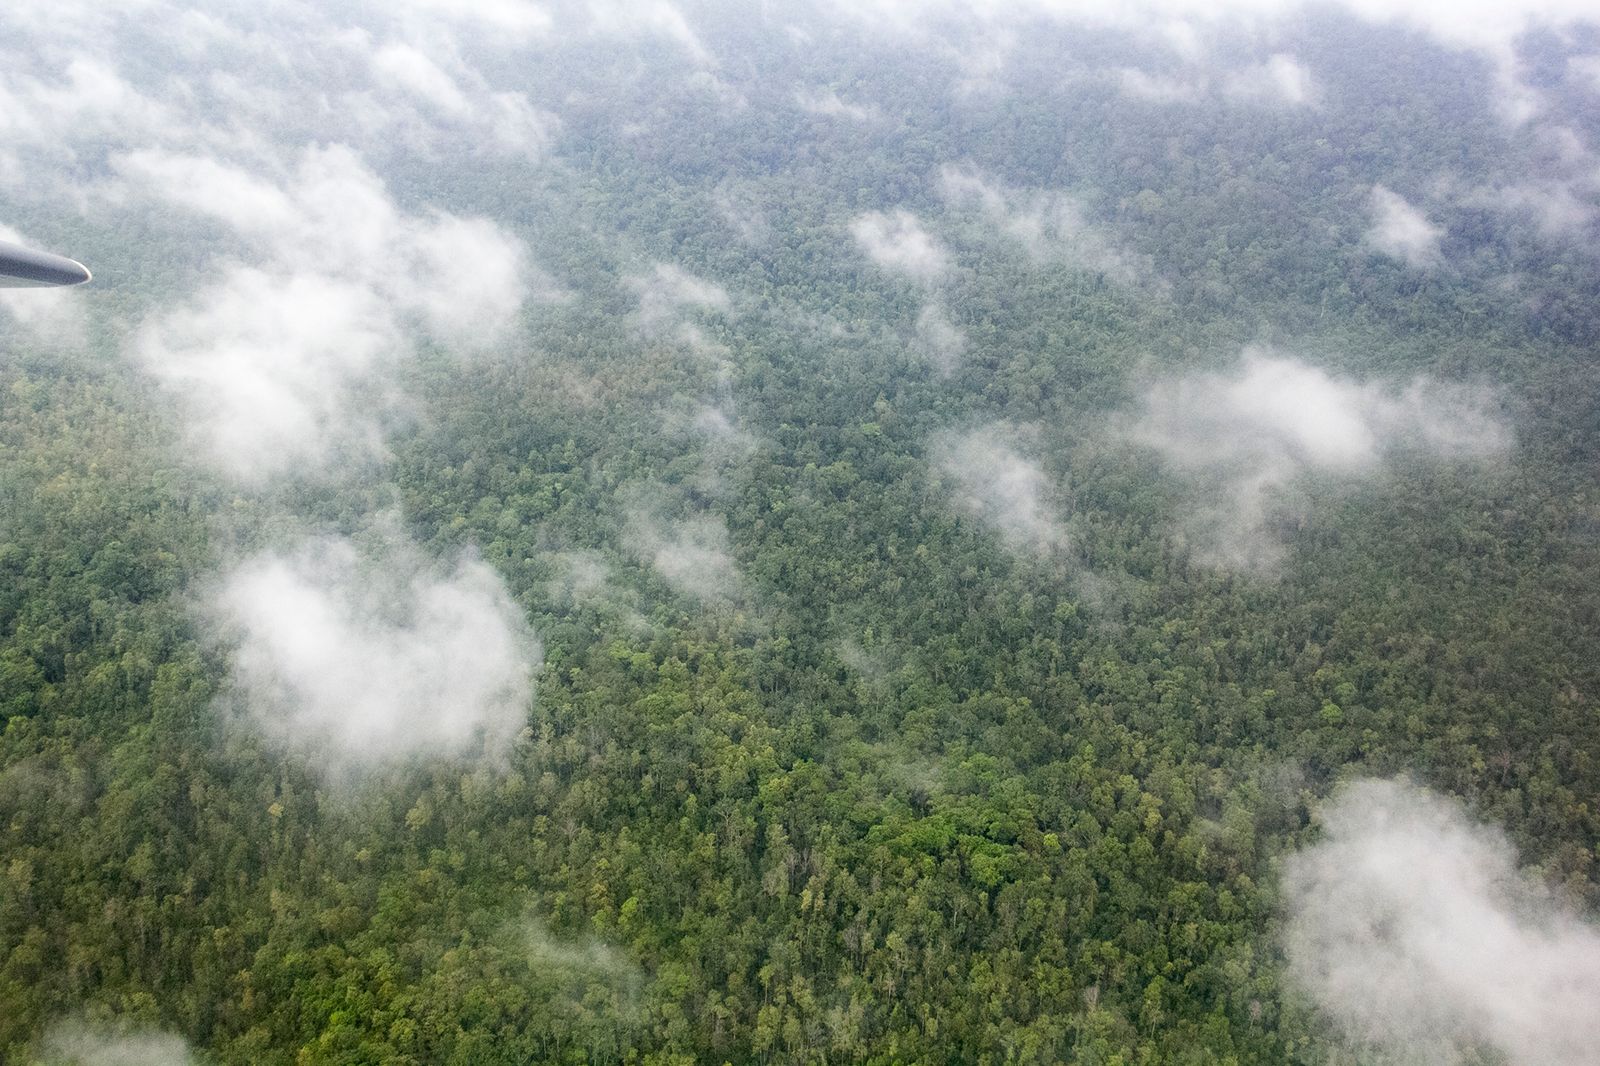 © Michael Eko - Rainforest in Malinau, North Kalimantan Province of Indonesia. 2020